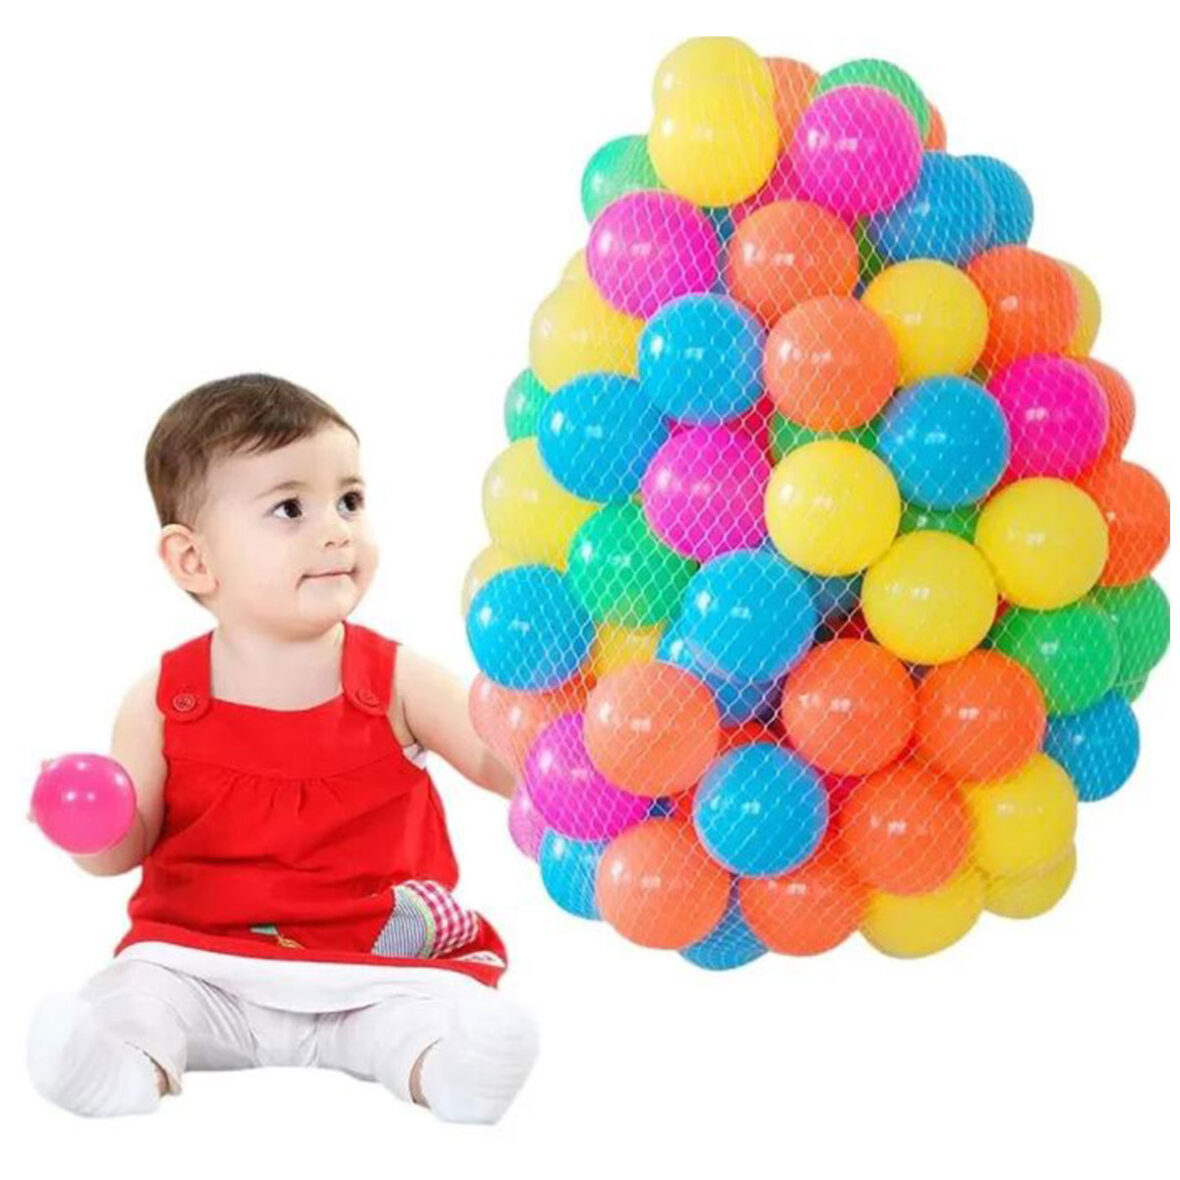 50pcs Colorful Balls